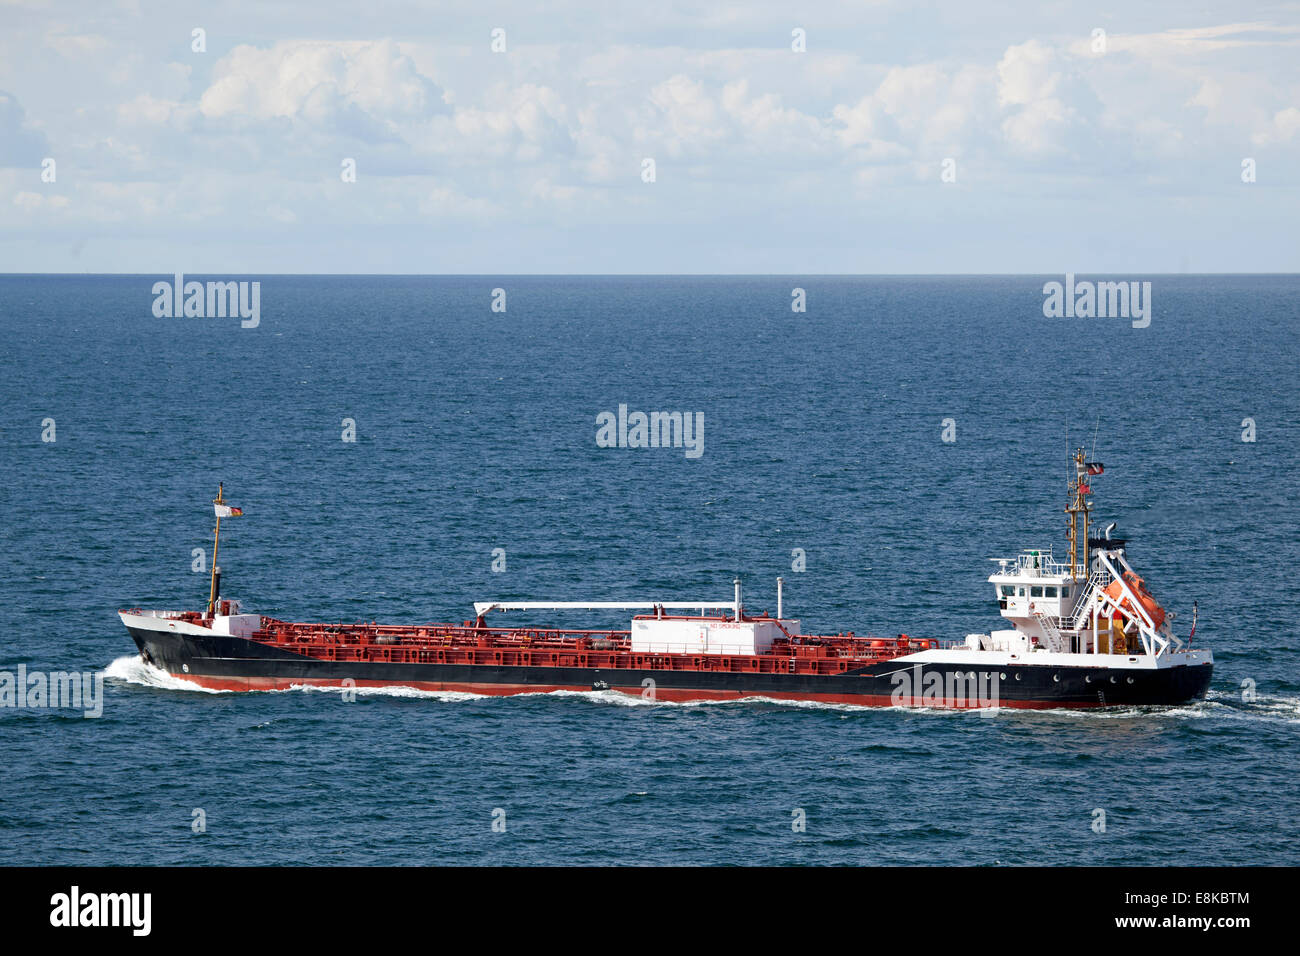 Freight vessel on the Baltic Sea near the Island of Langeland, Denmark Stock Photo